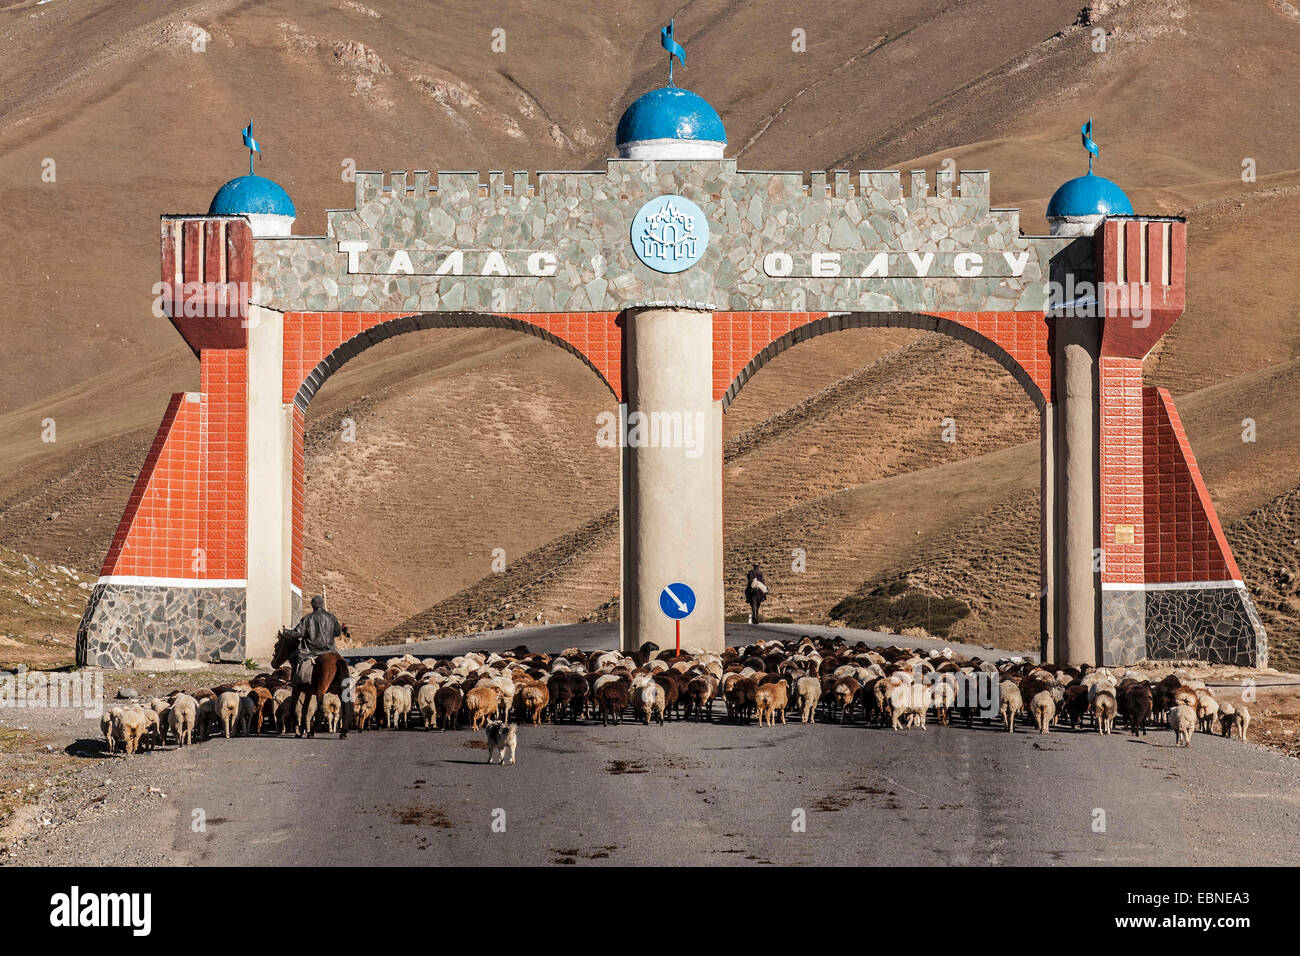 flock of sheeps on road with monument, Kyrgyzstan, Djalalabad, Taskoemuer Stock Photo